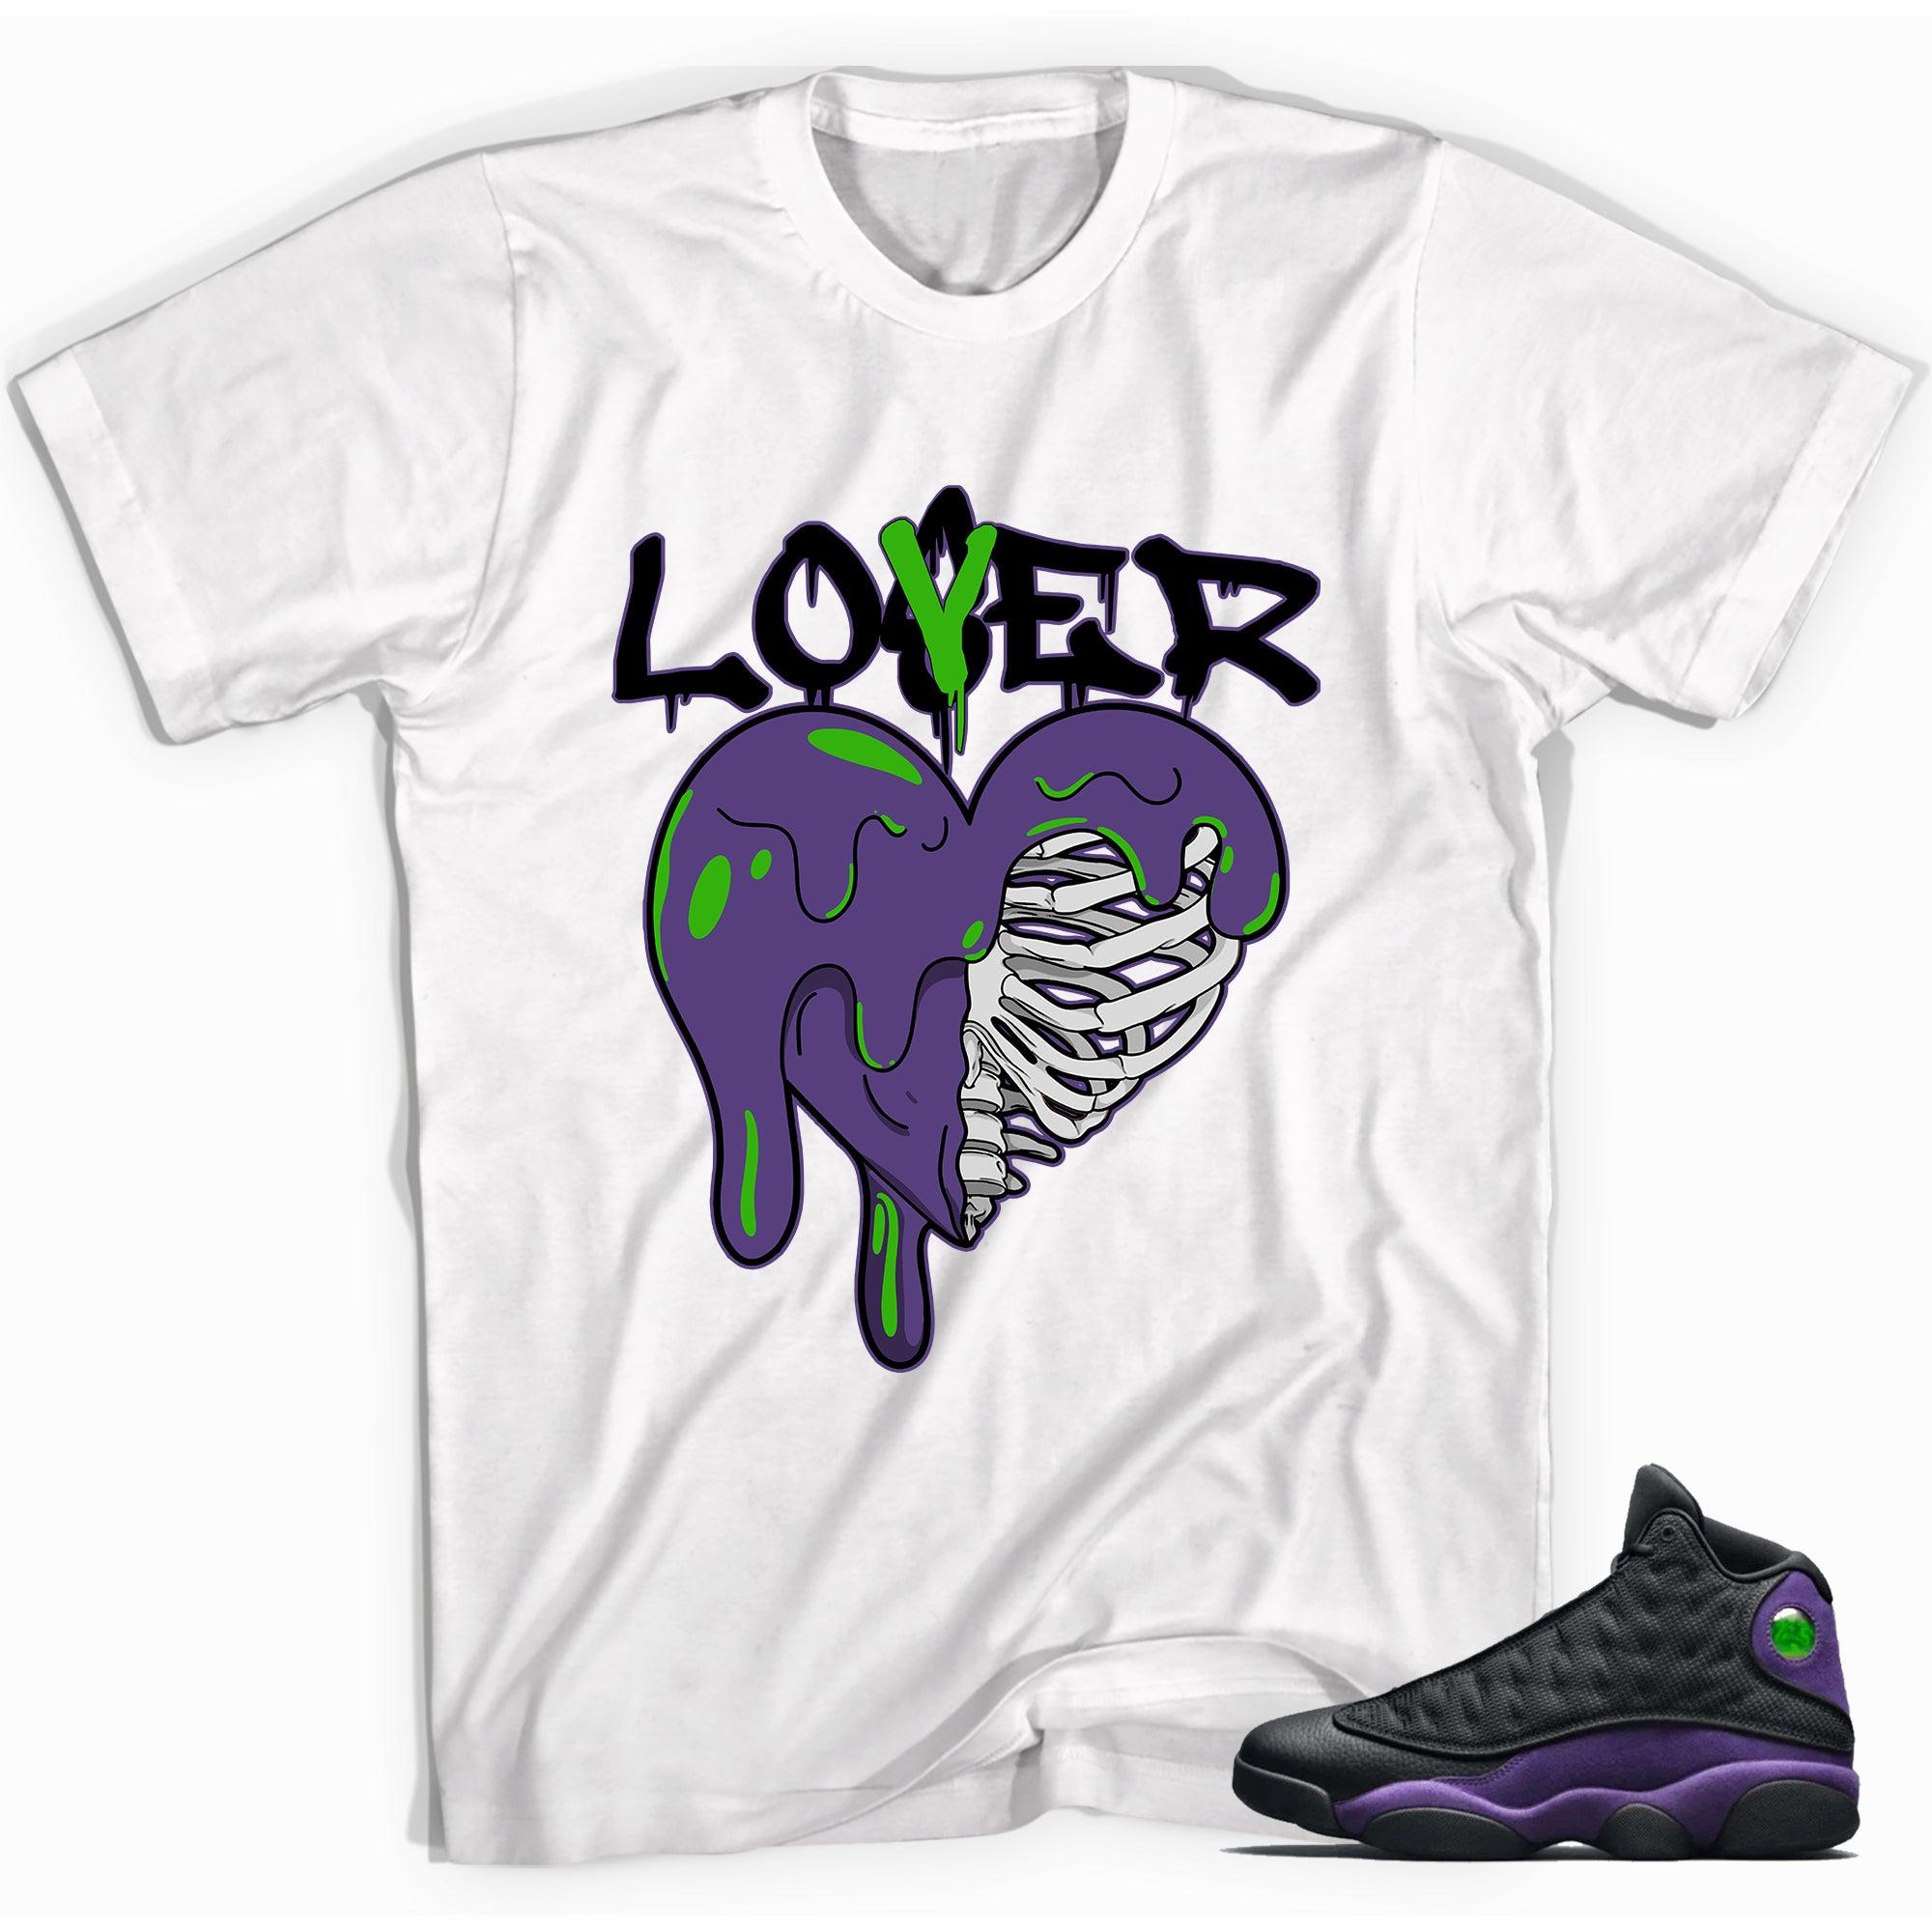 Lover Shirt Jordan 13s Court Purple photo